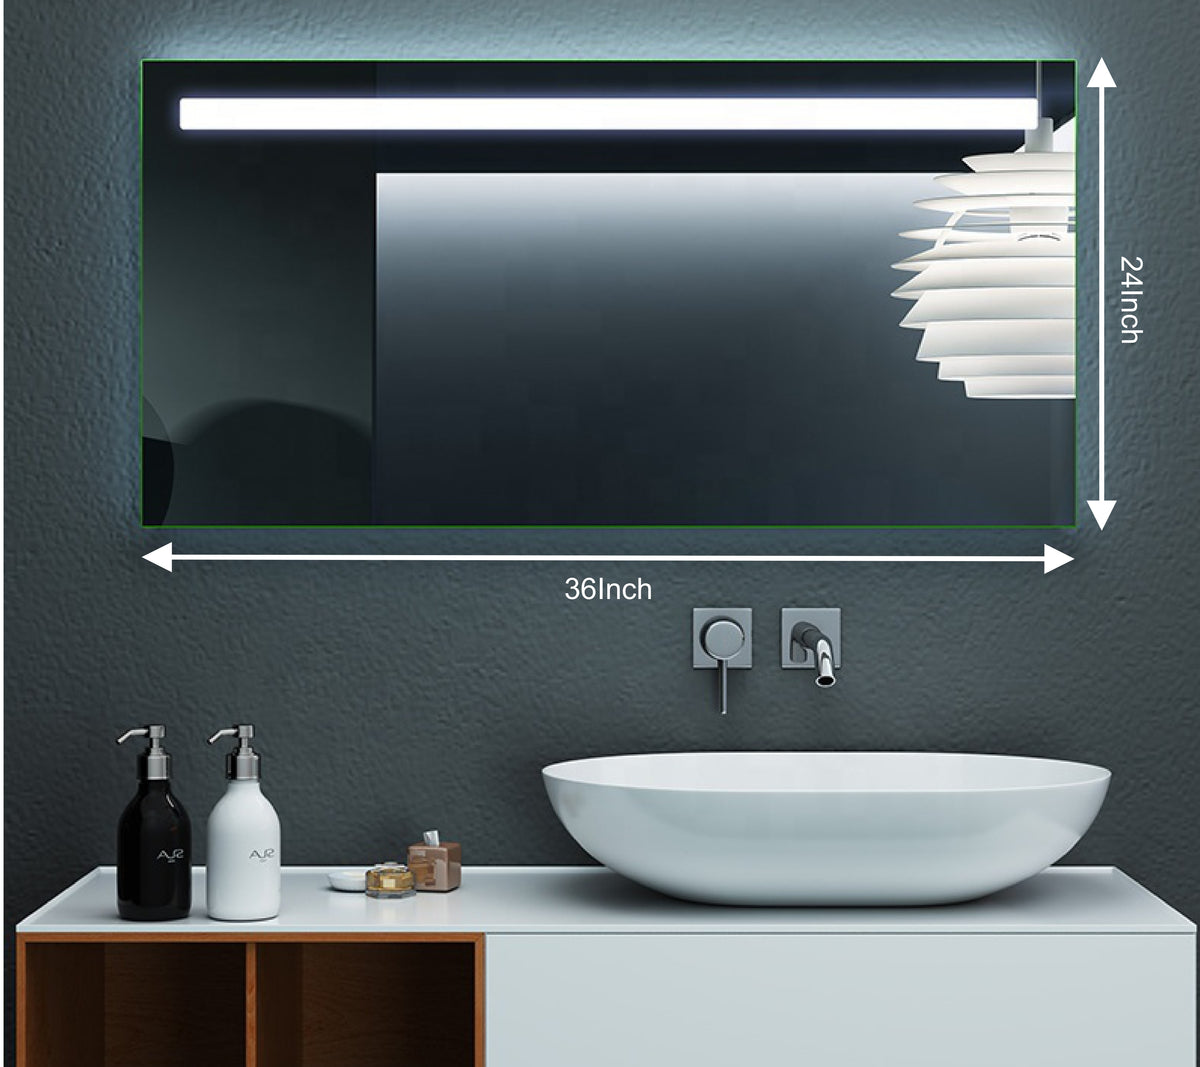 smilesellers Decorative 3 Color Led Mirror for Bathroom, Bedroom, Washbasin, Home Makeup led Light Mirror , Backlit Mirror